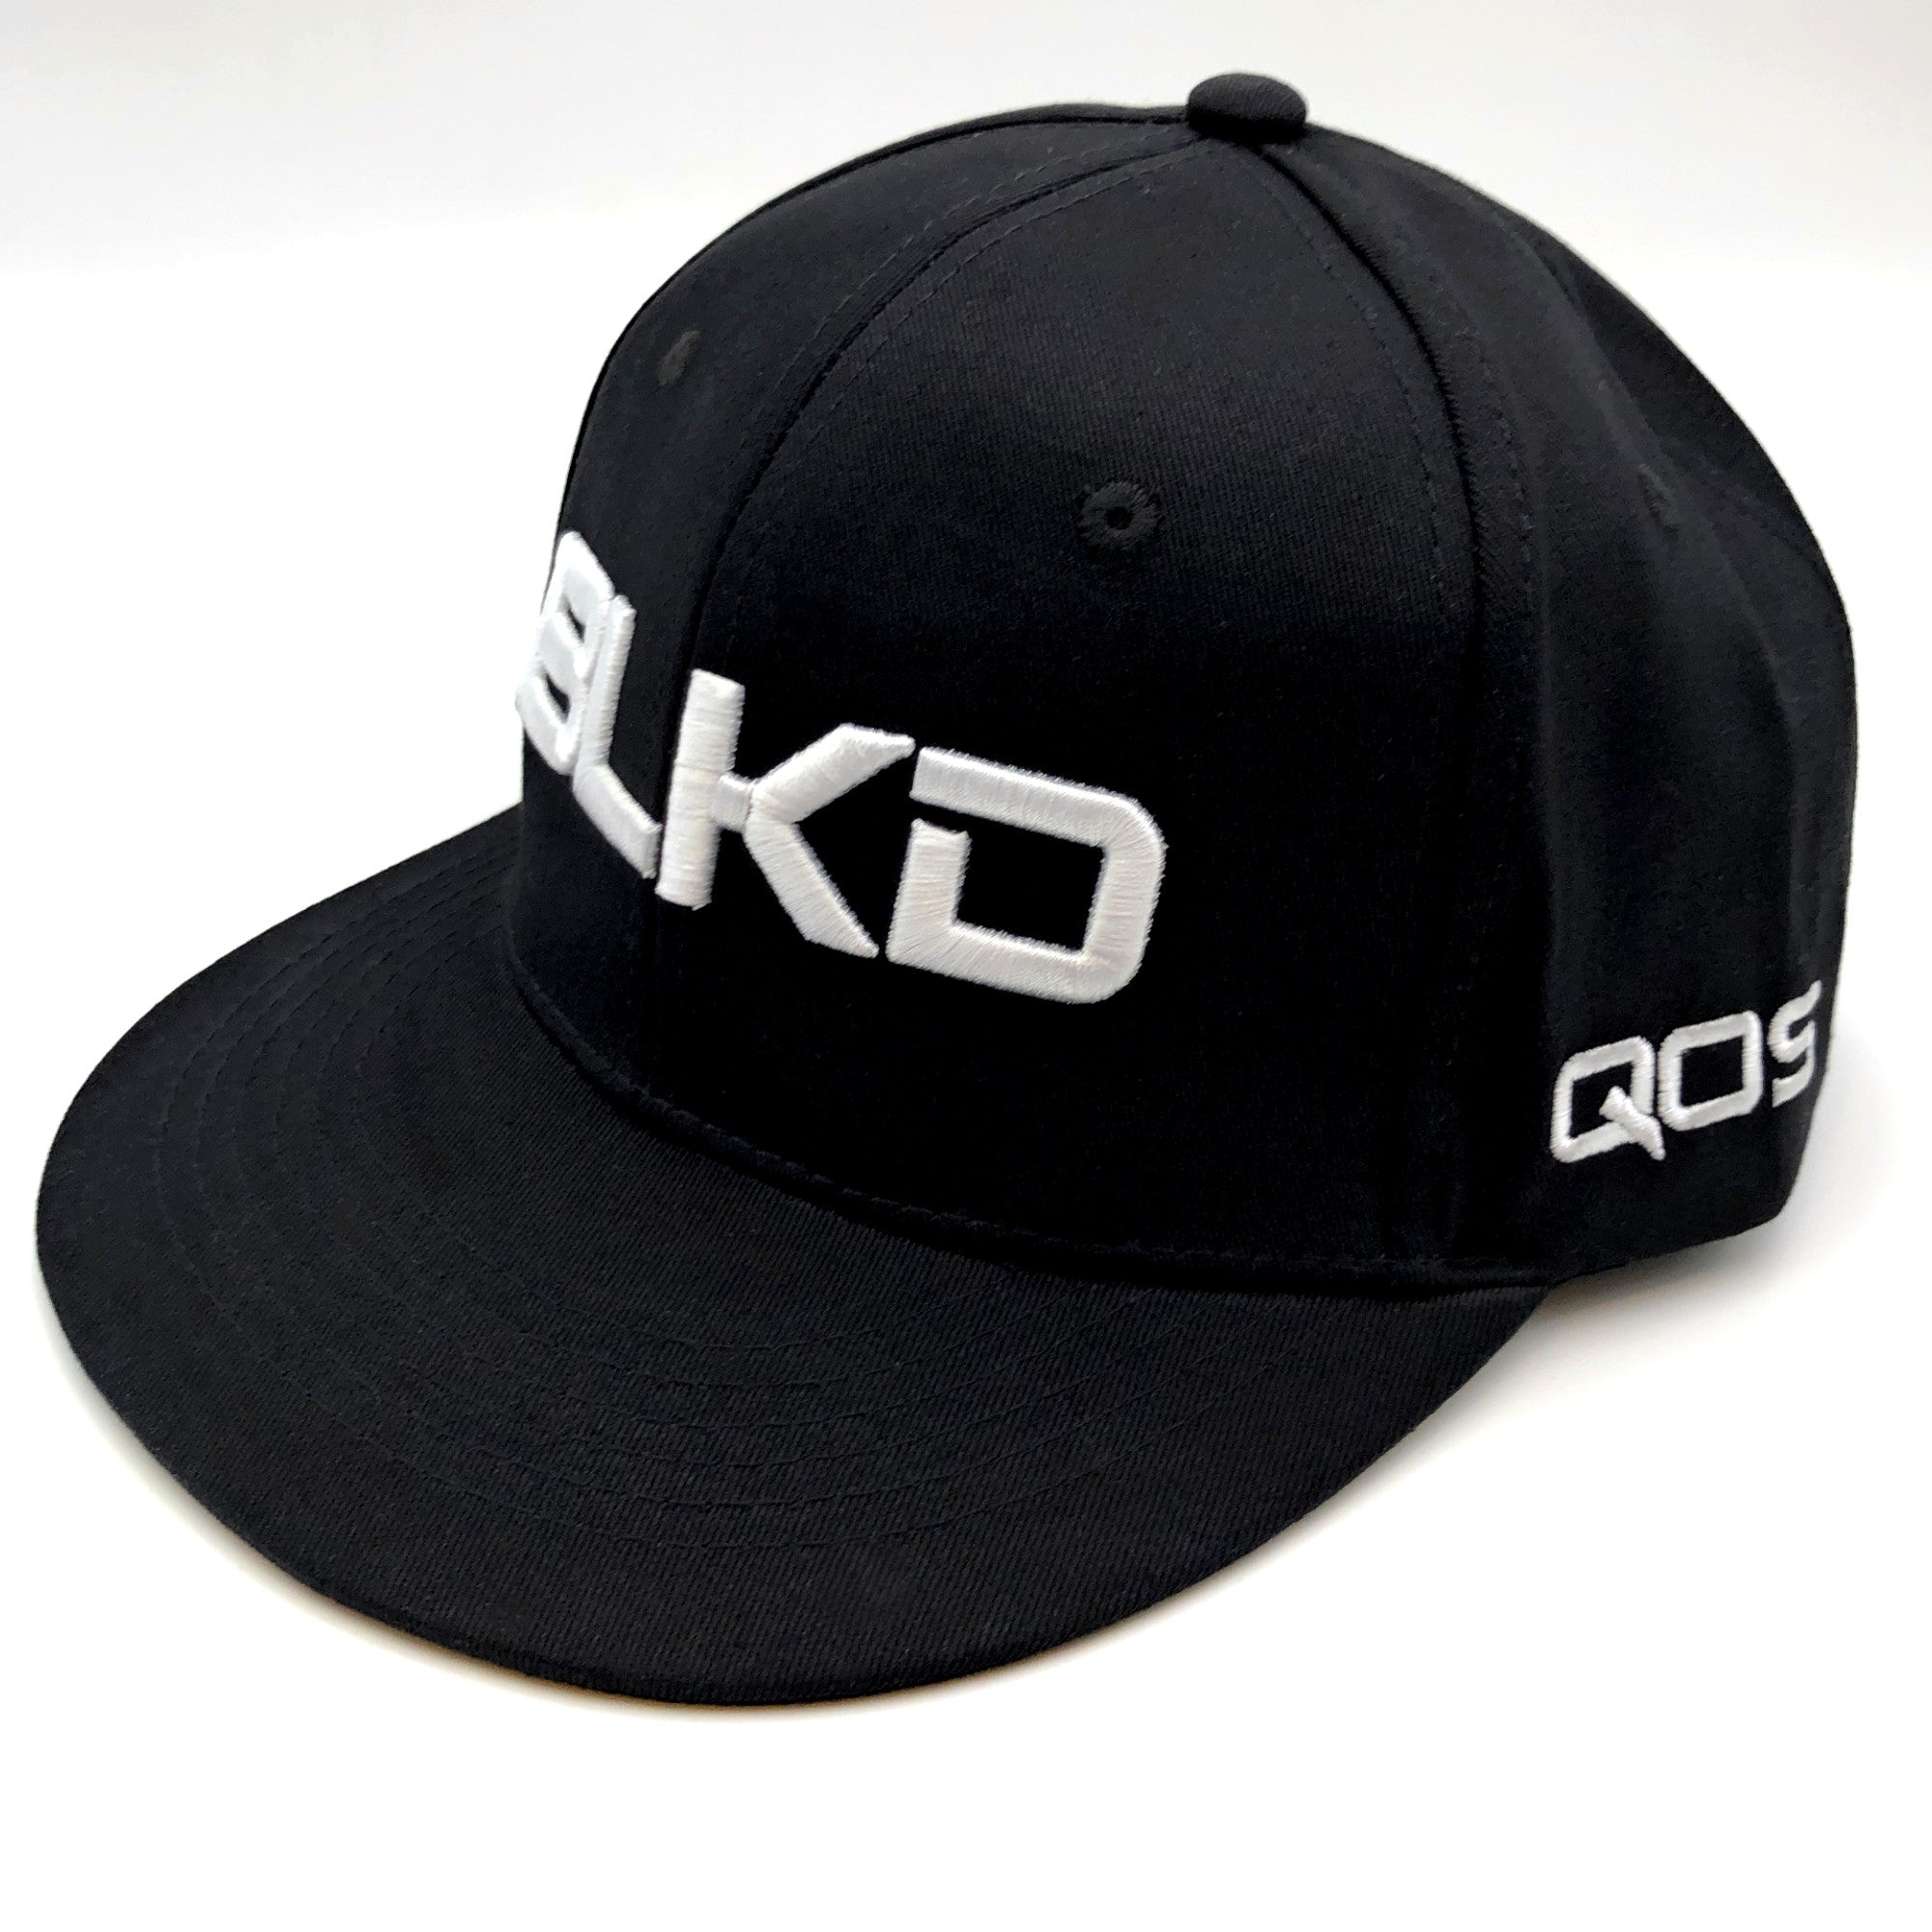 BLKD - Adjustable Baseball  Cap Hat Black/White by QOS Blacked